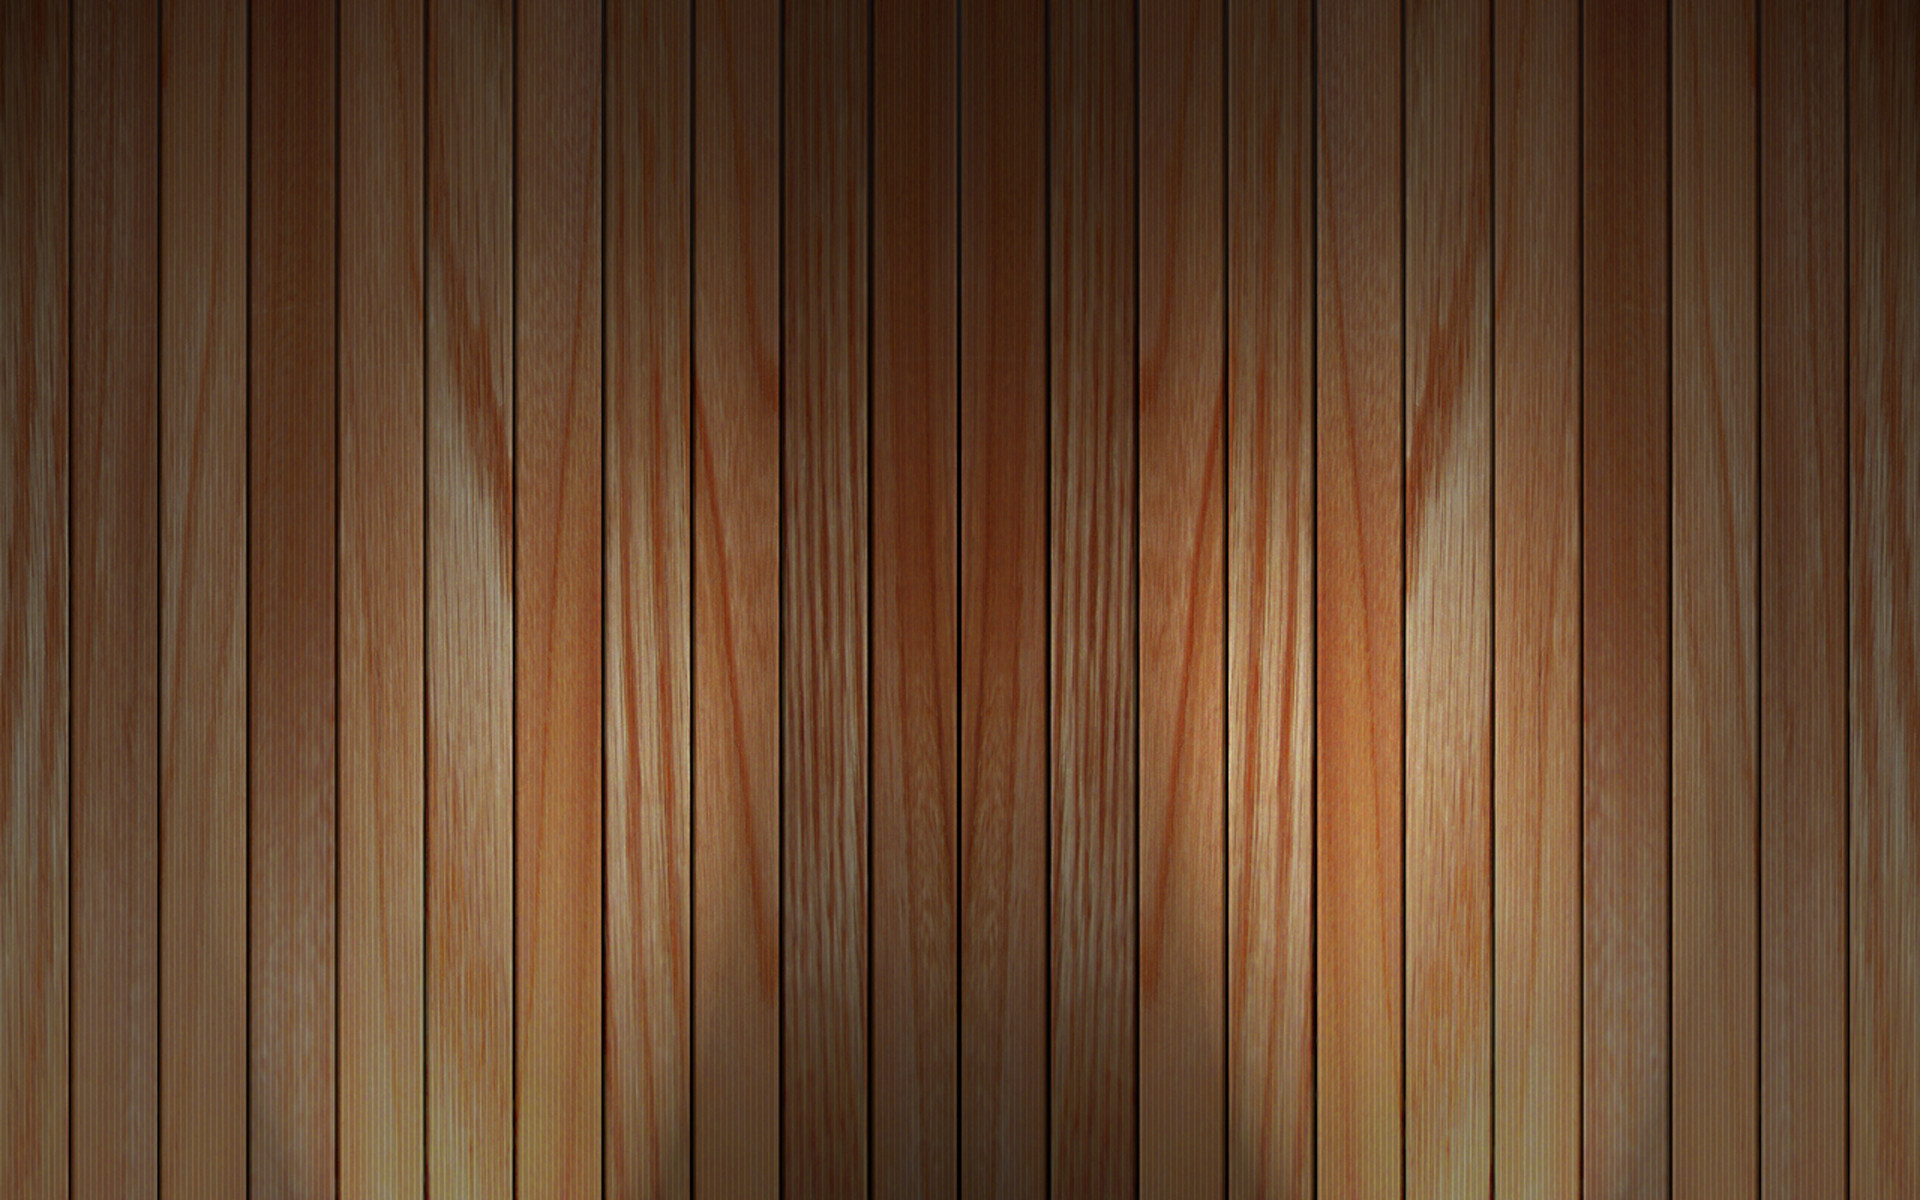 1920x1200 Hd Wood Grain Wallpapers Pixelstalknet .